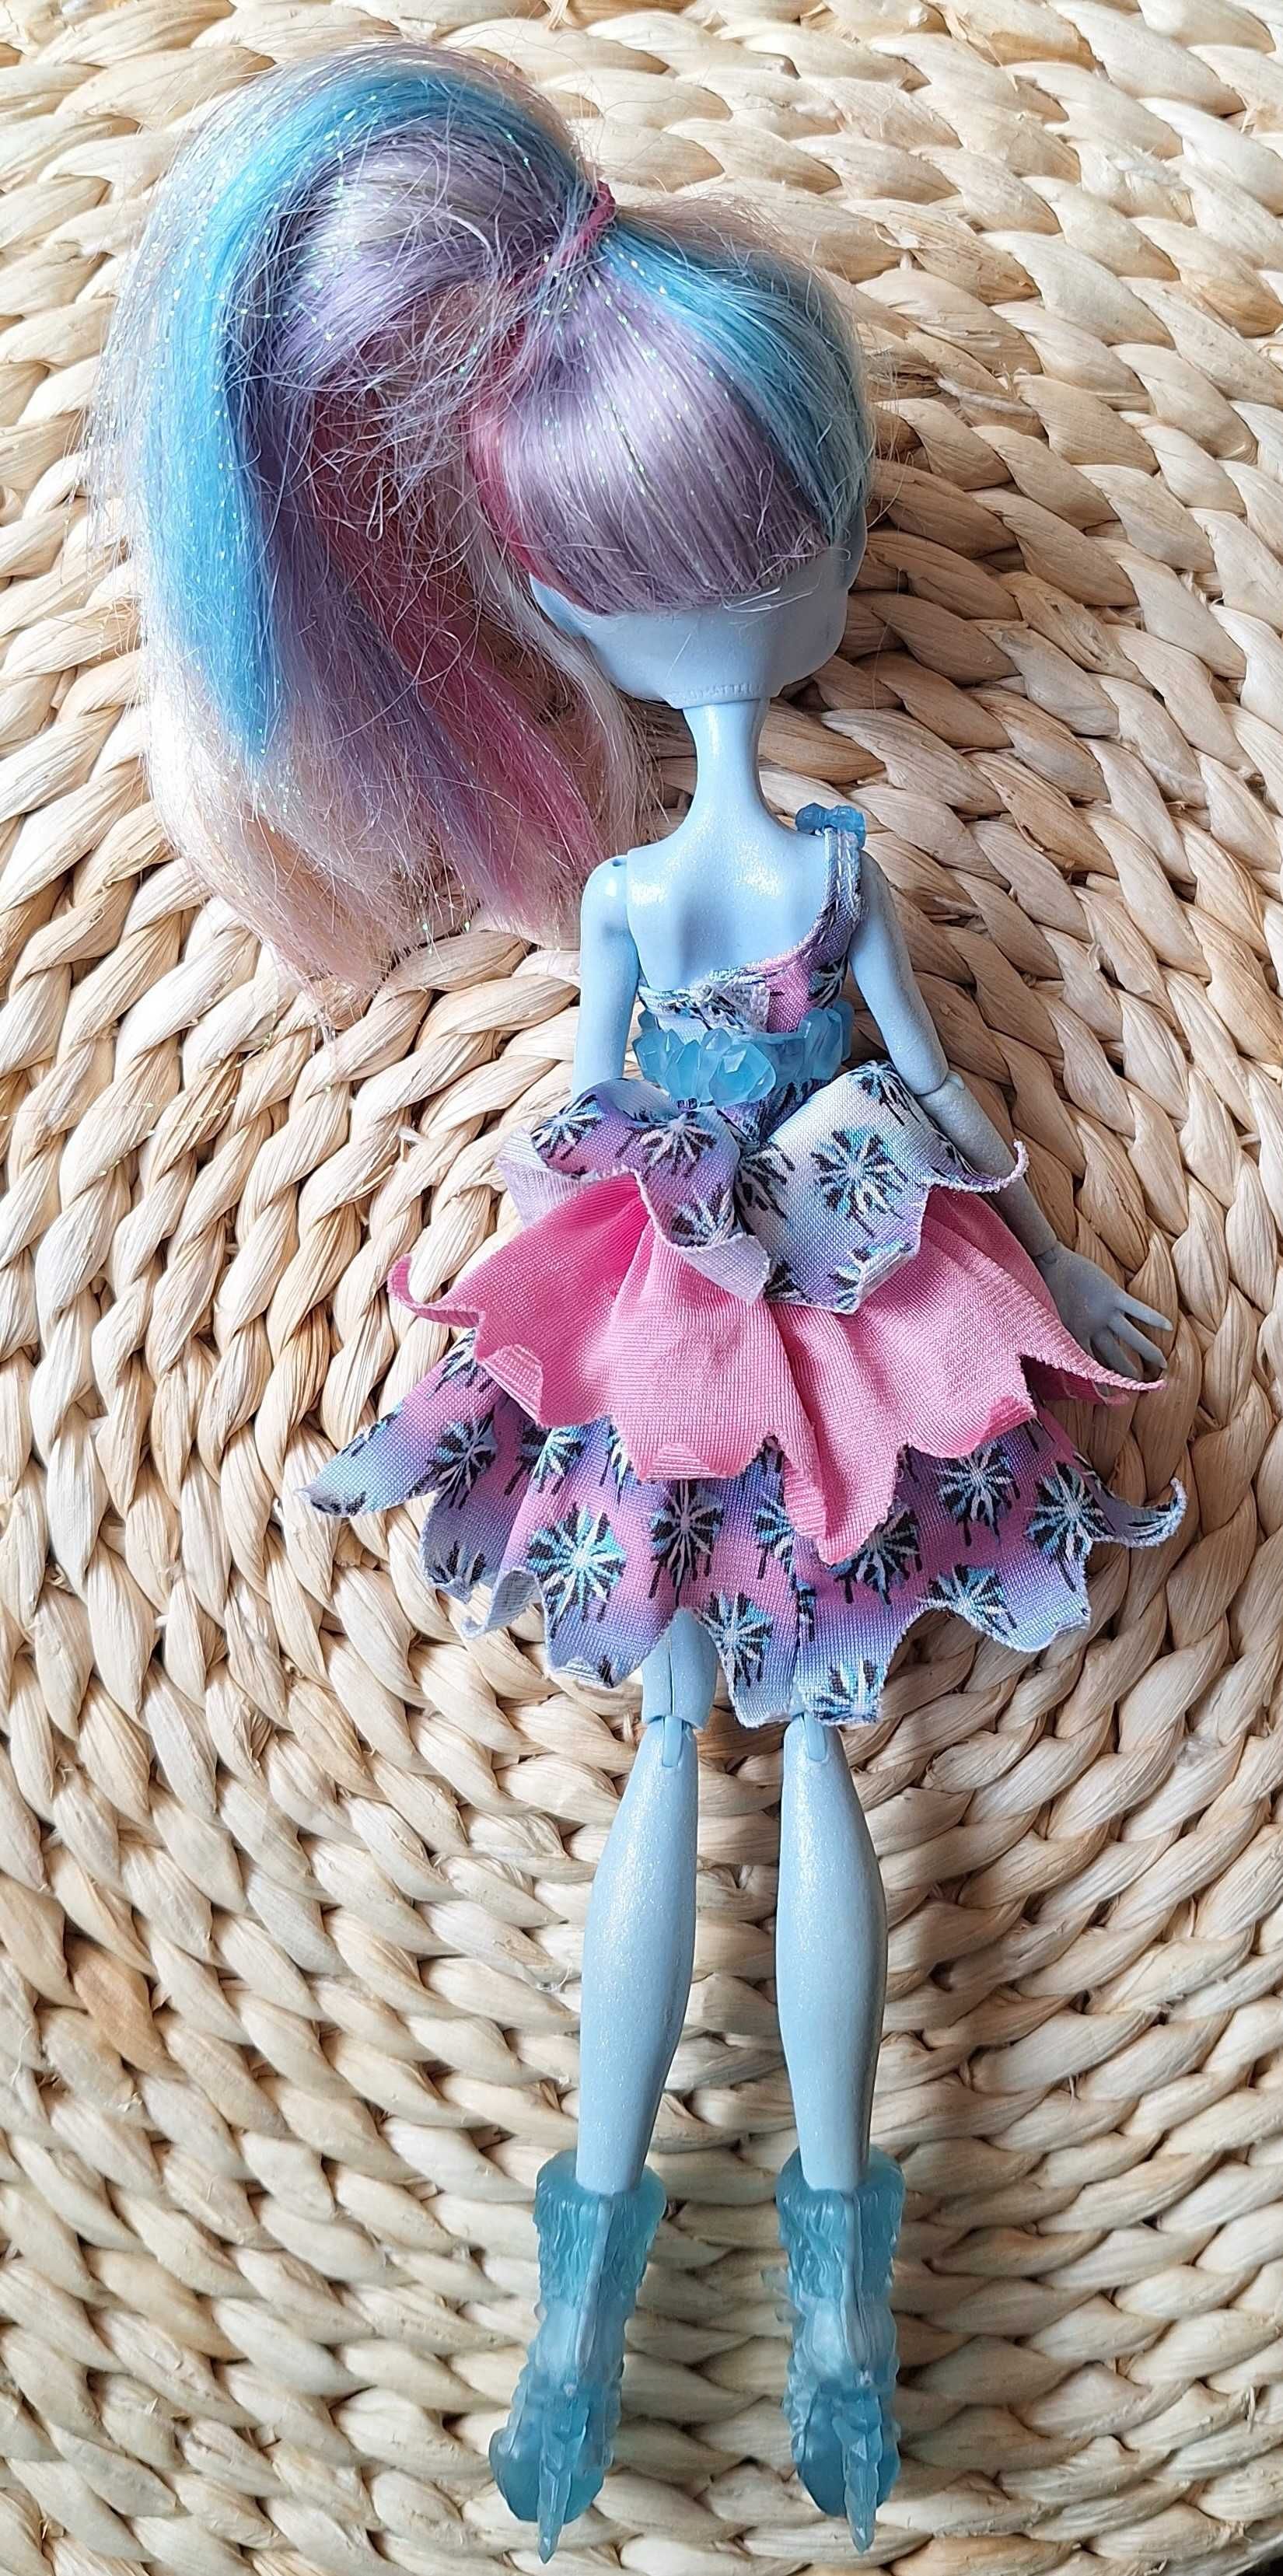 Abbey Bominable Dot Dead Gorgeous Monster High Mattel lalka kolekcja